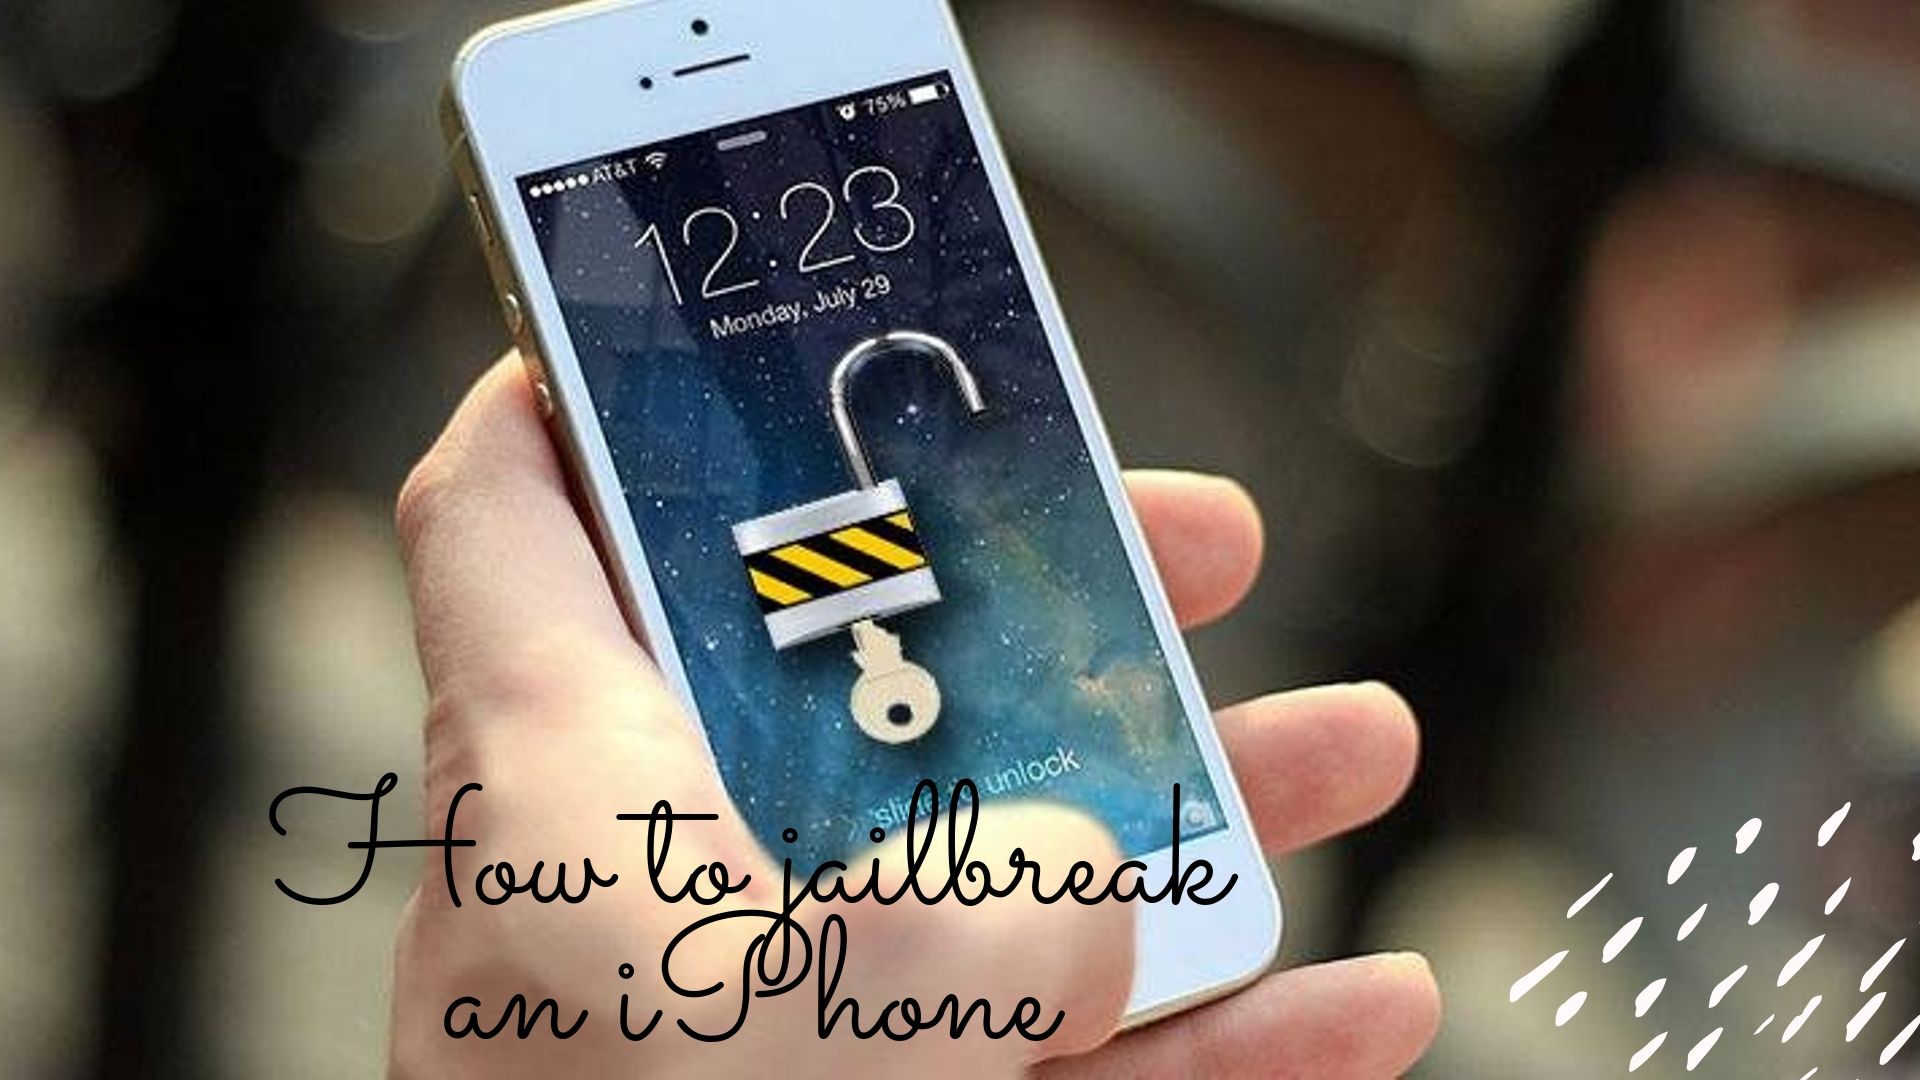 How to jailbreak an iPhone?